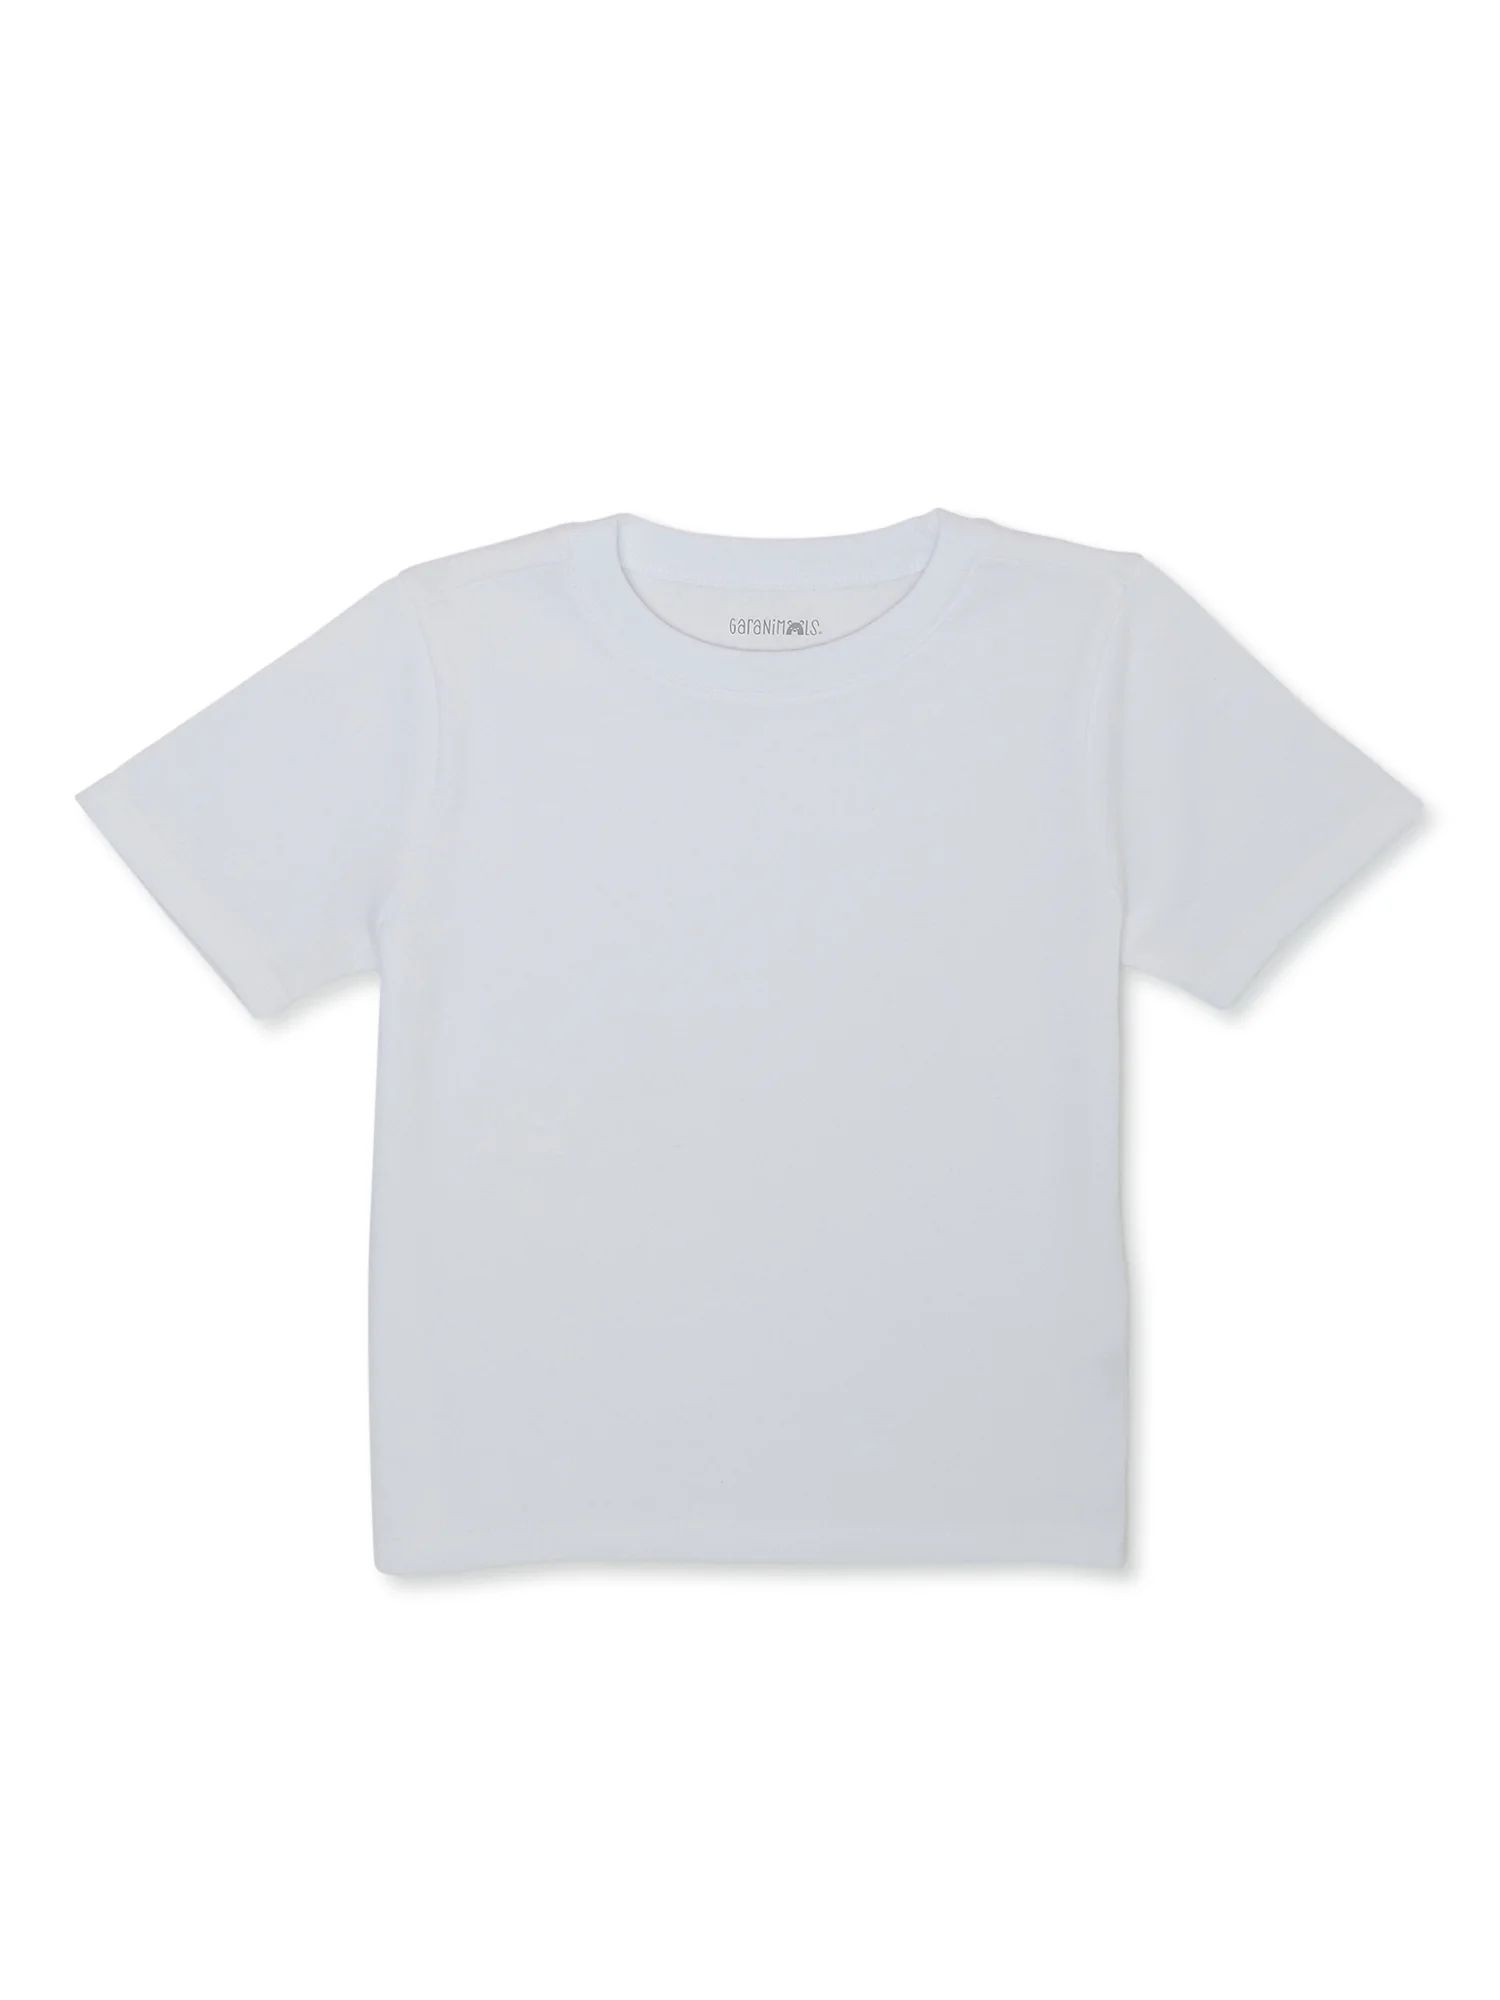 Garanimals Toddler Boy Short Sleeve Solid T-Shirt, Sizes 18M-5T | Walmart (US)